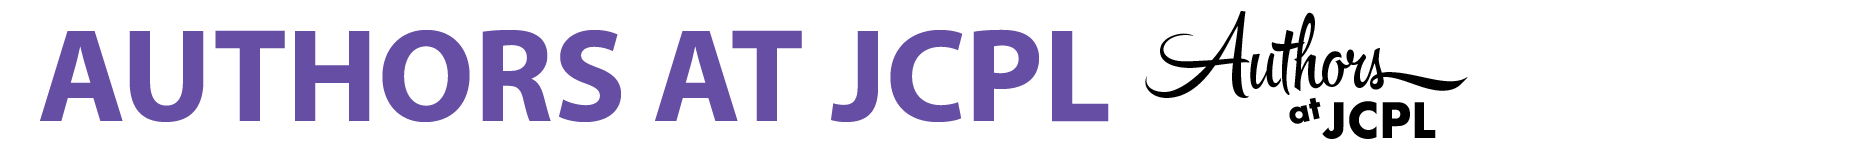 Authors at JCPL logo